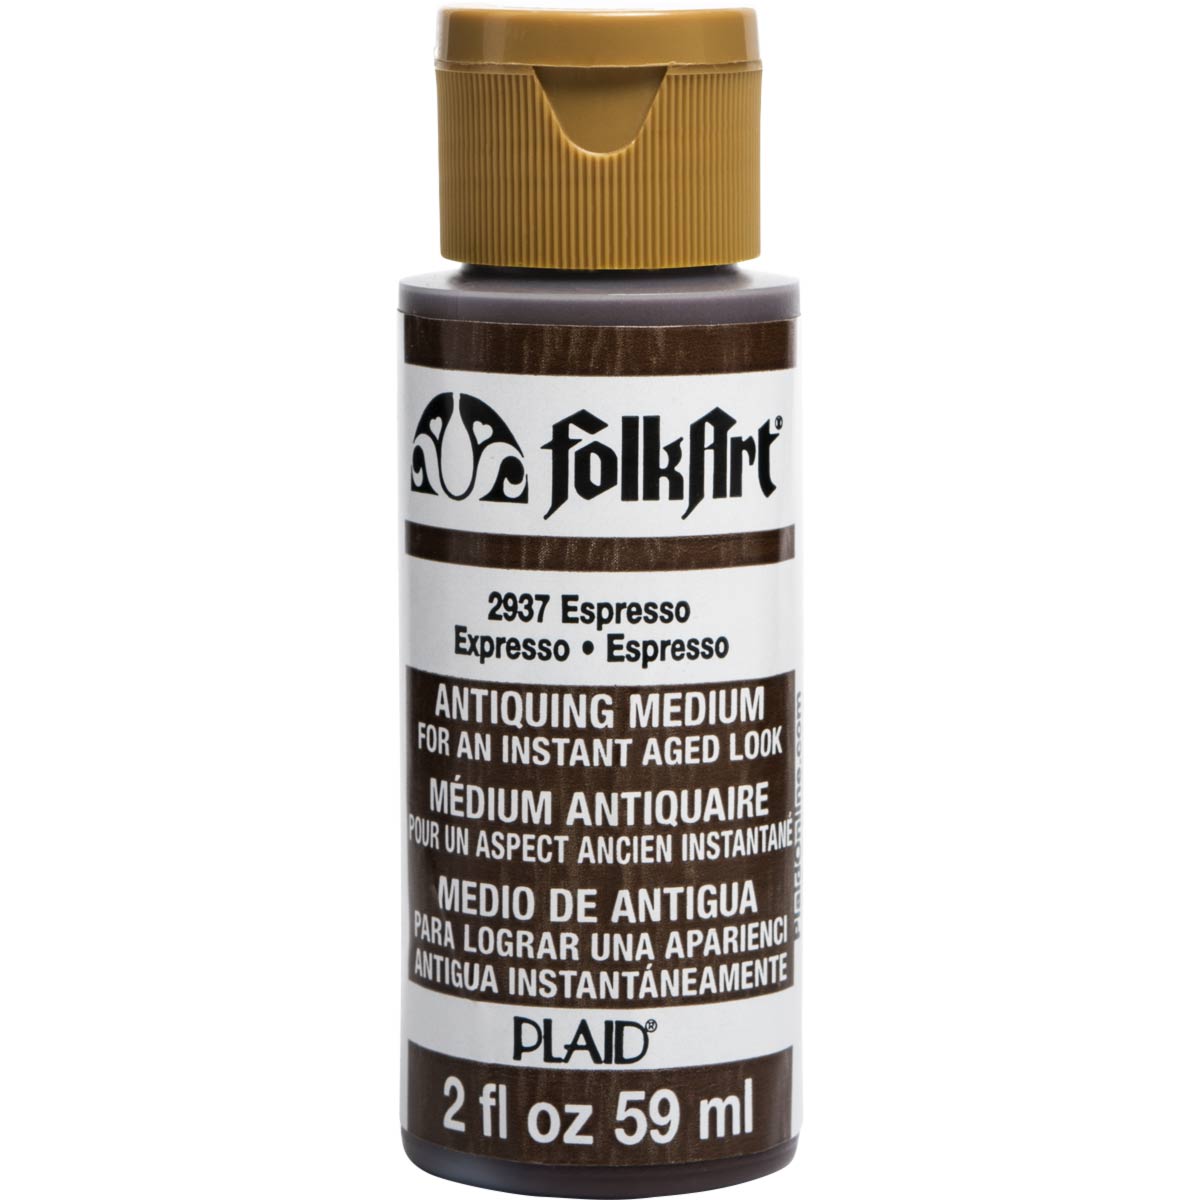 FolkArt ® Mediums - Antiquing Medium - Espresso, 2 oz. - 2937